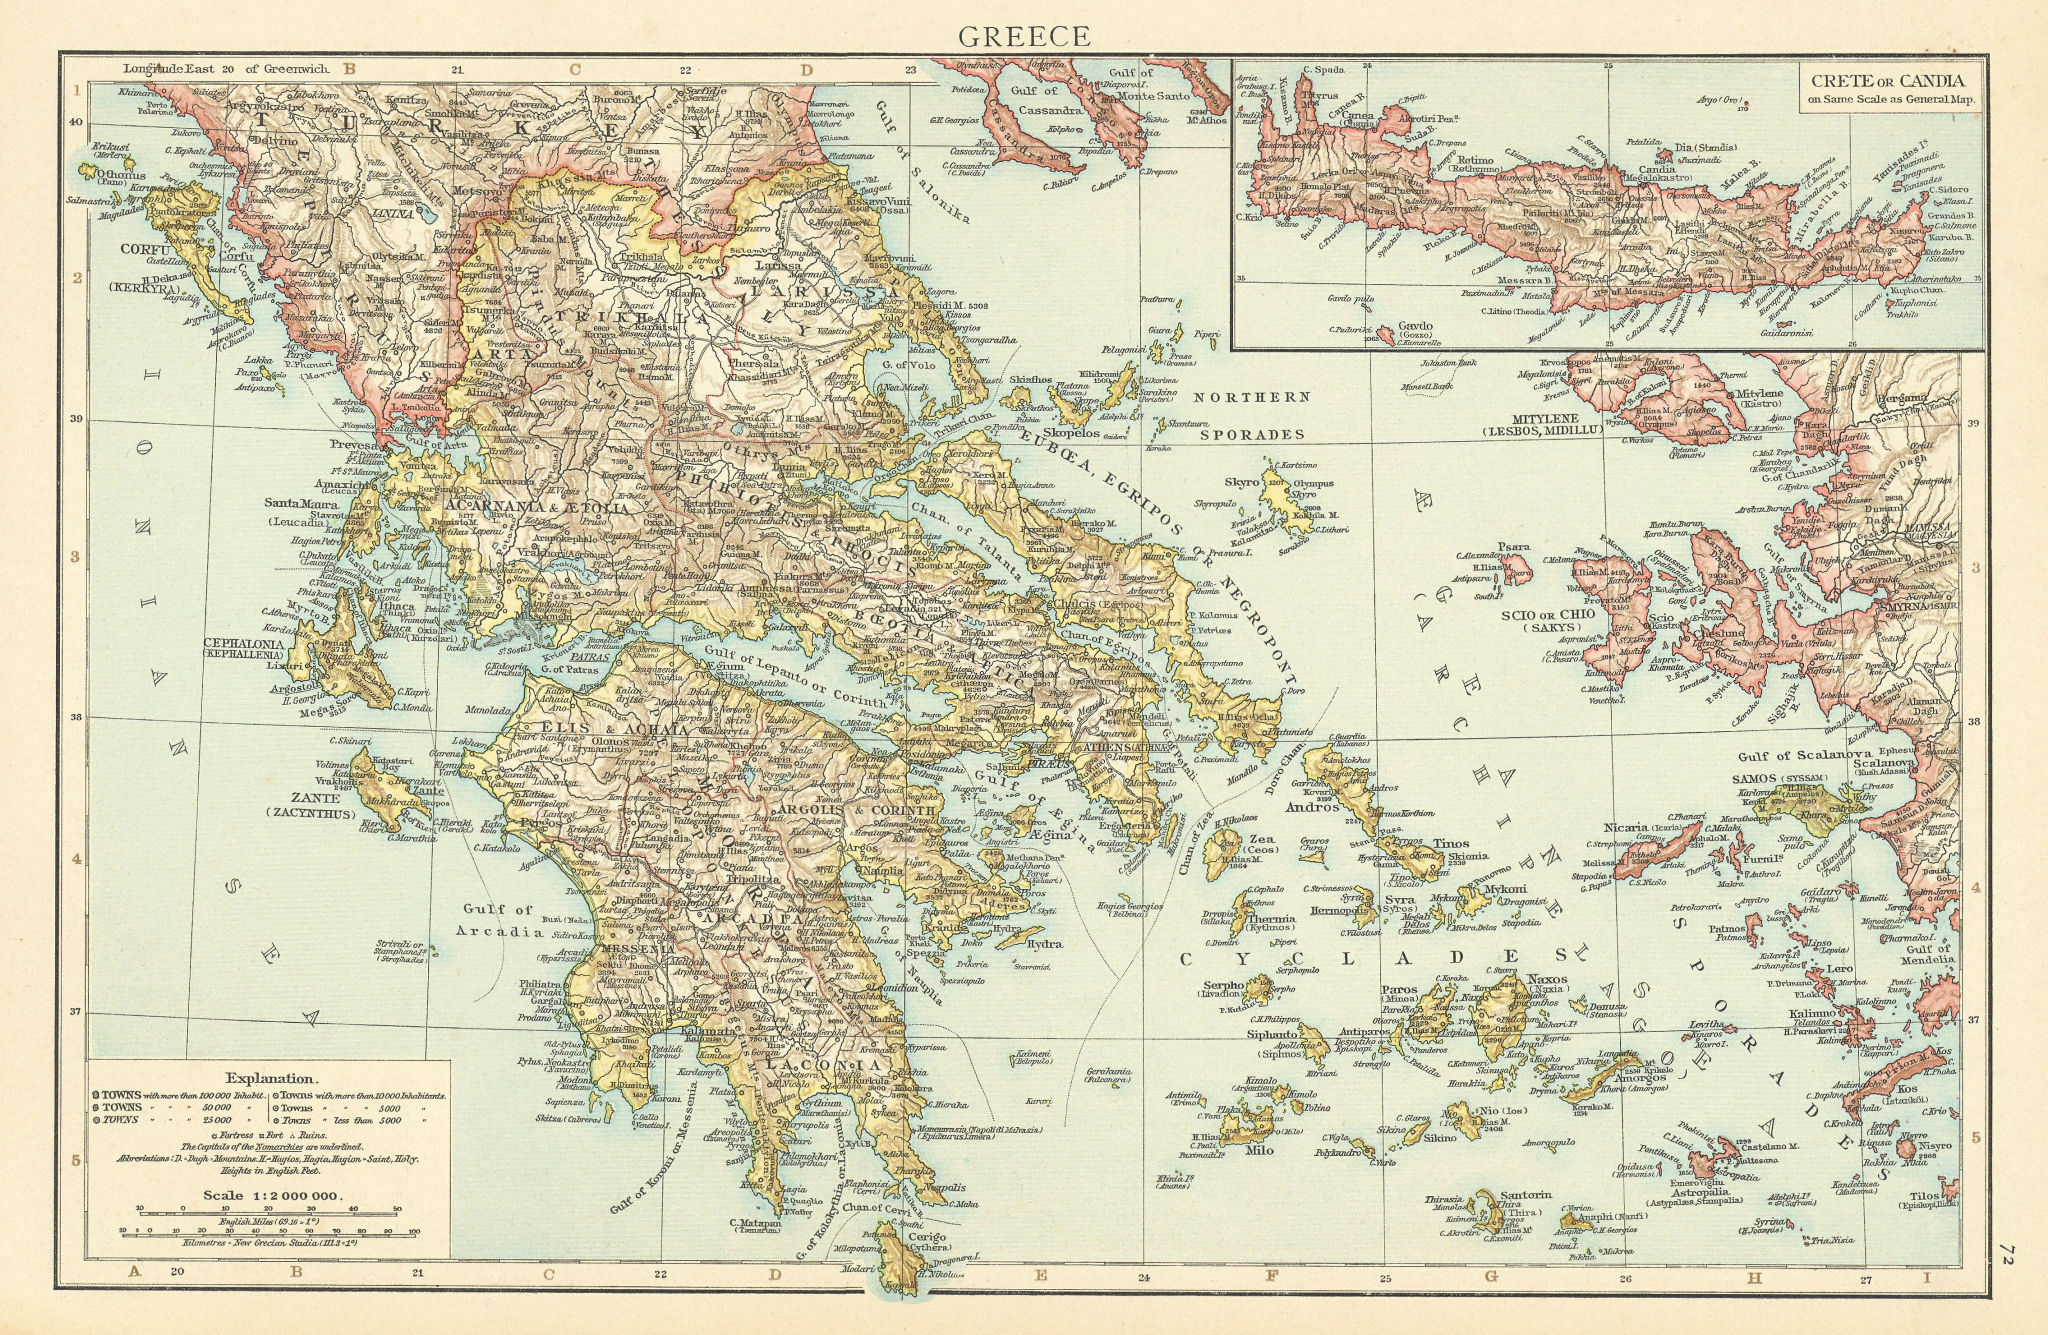 Greece. Aegean & Ionian islands. Cyclades Sporades Crete. THE TIMES 1895 map